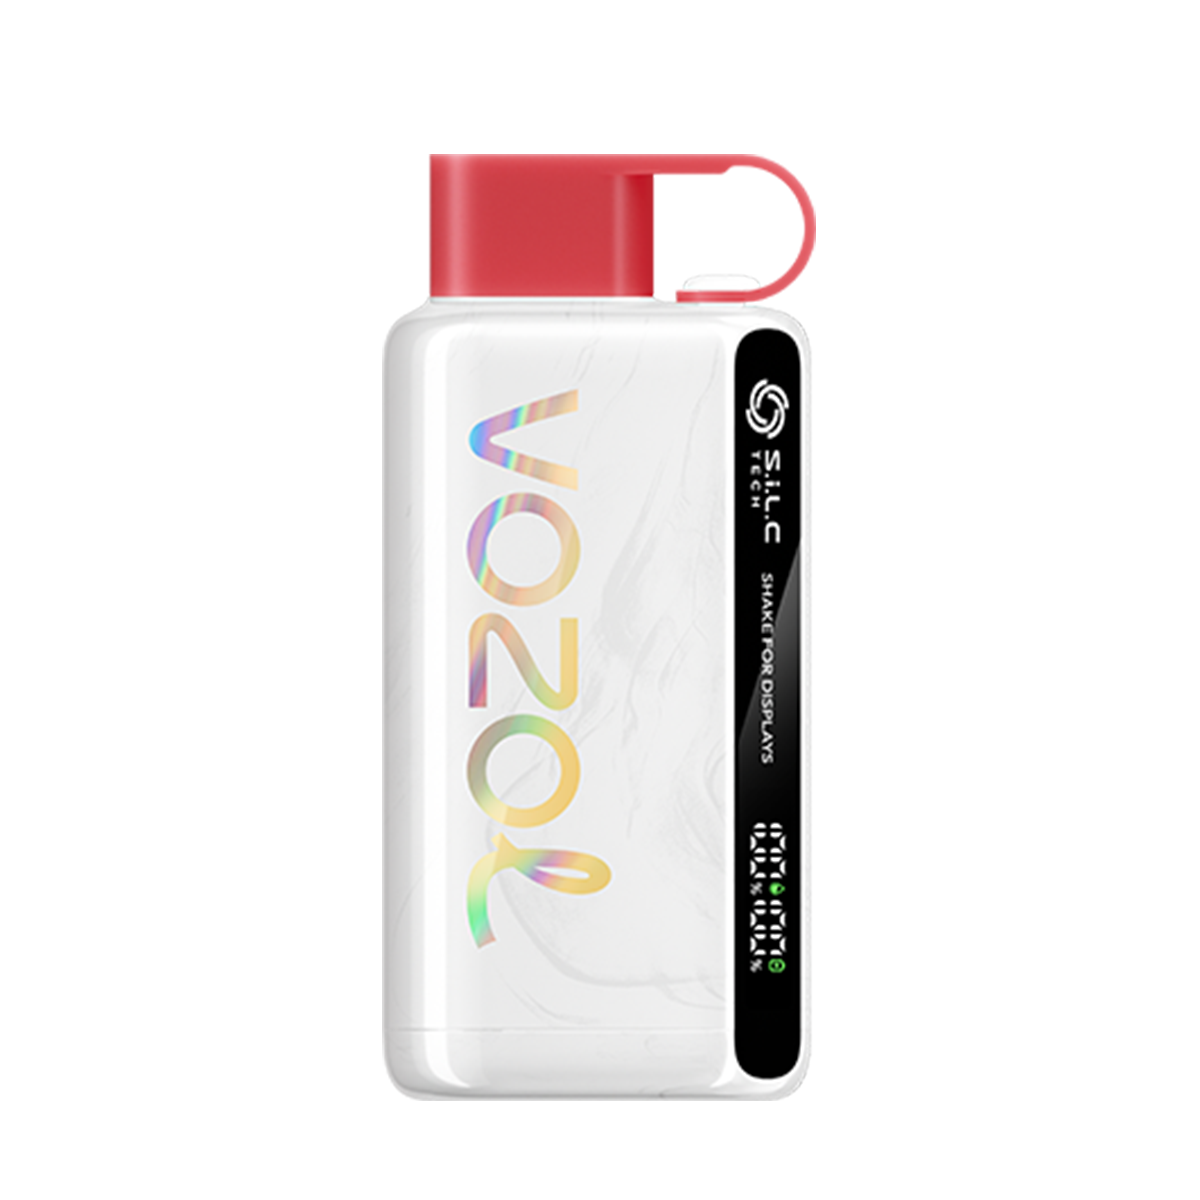 Vozol Star 9000 Disposable Vape Cherry Cola  